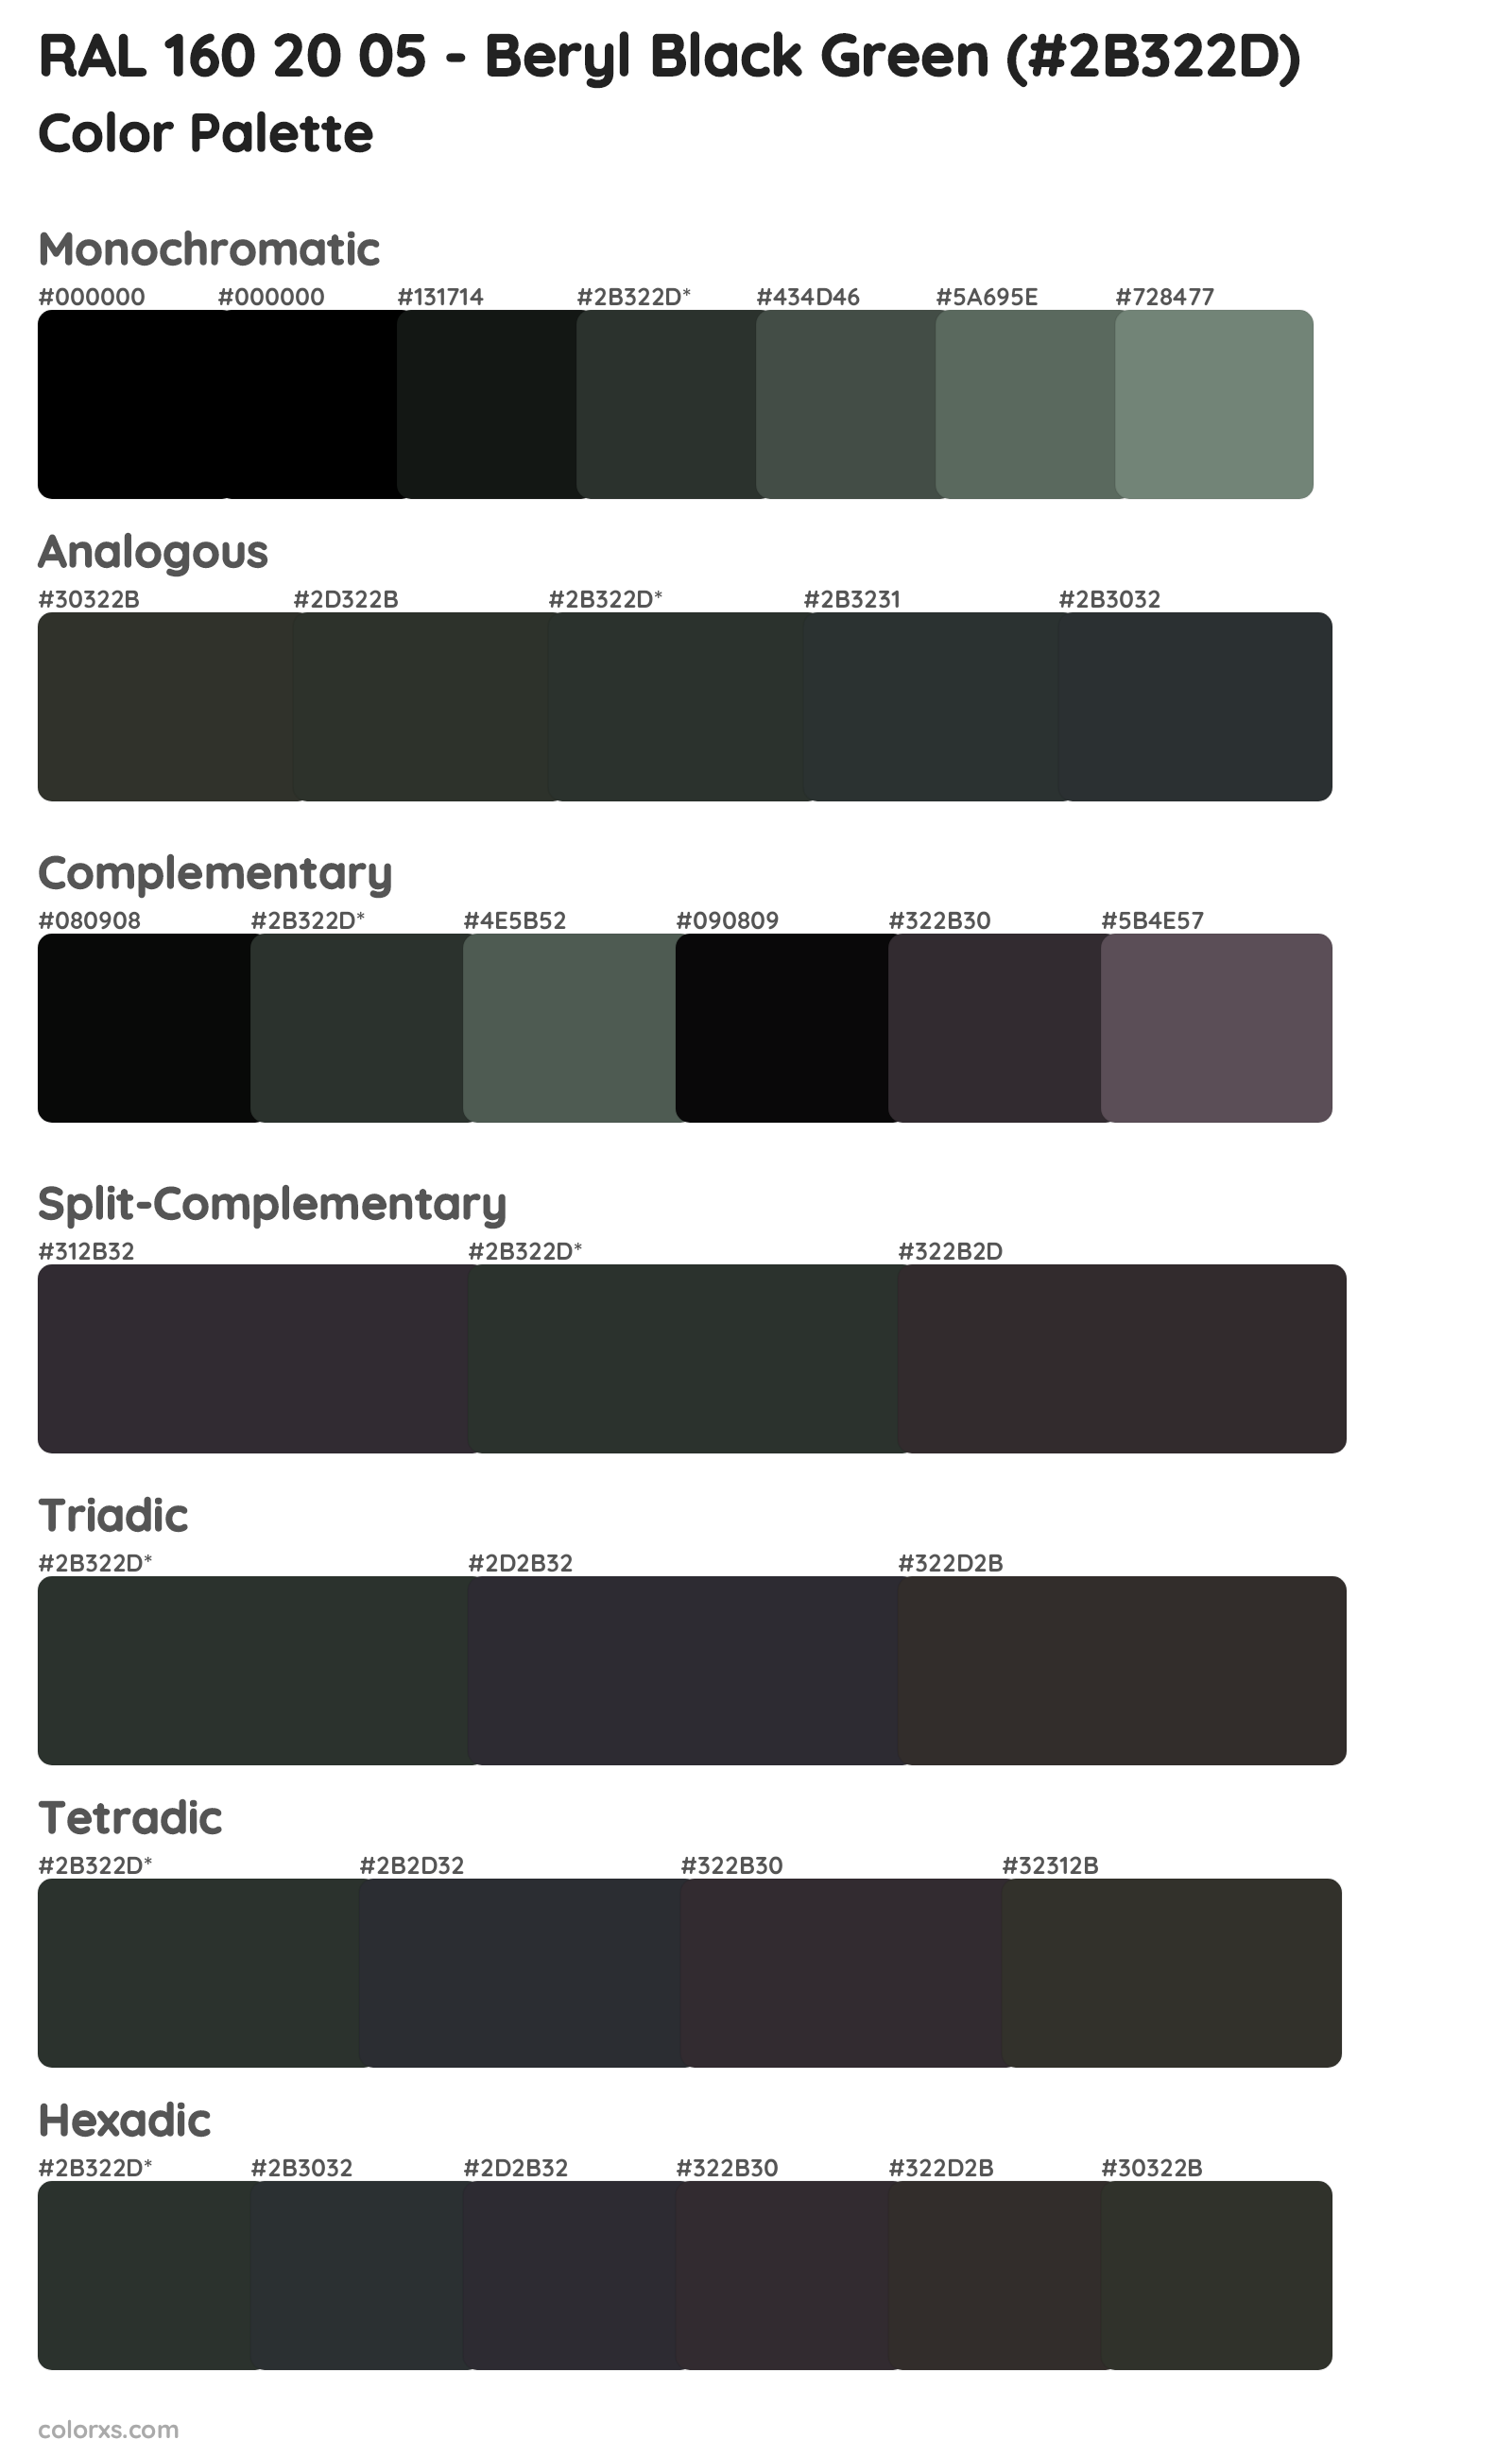 RAL 160 20 05 - Beryl Black Green Color Scheme Palettes